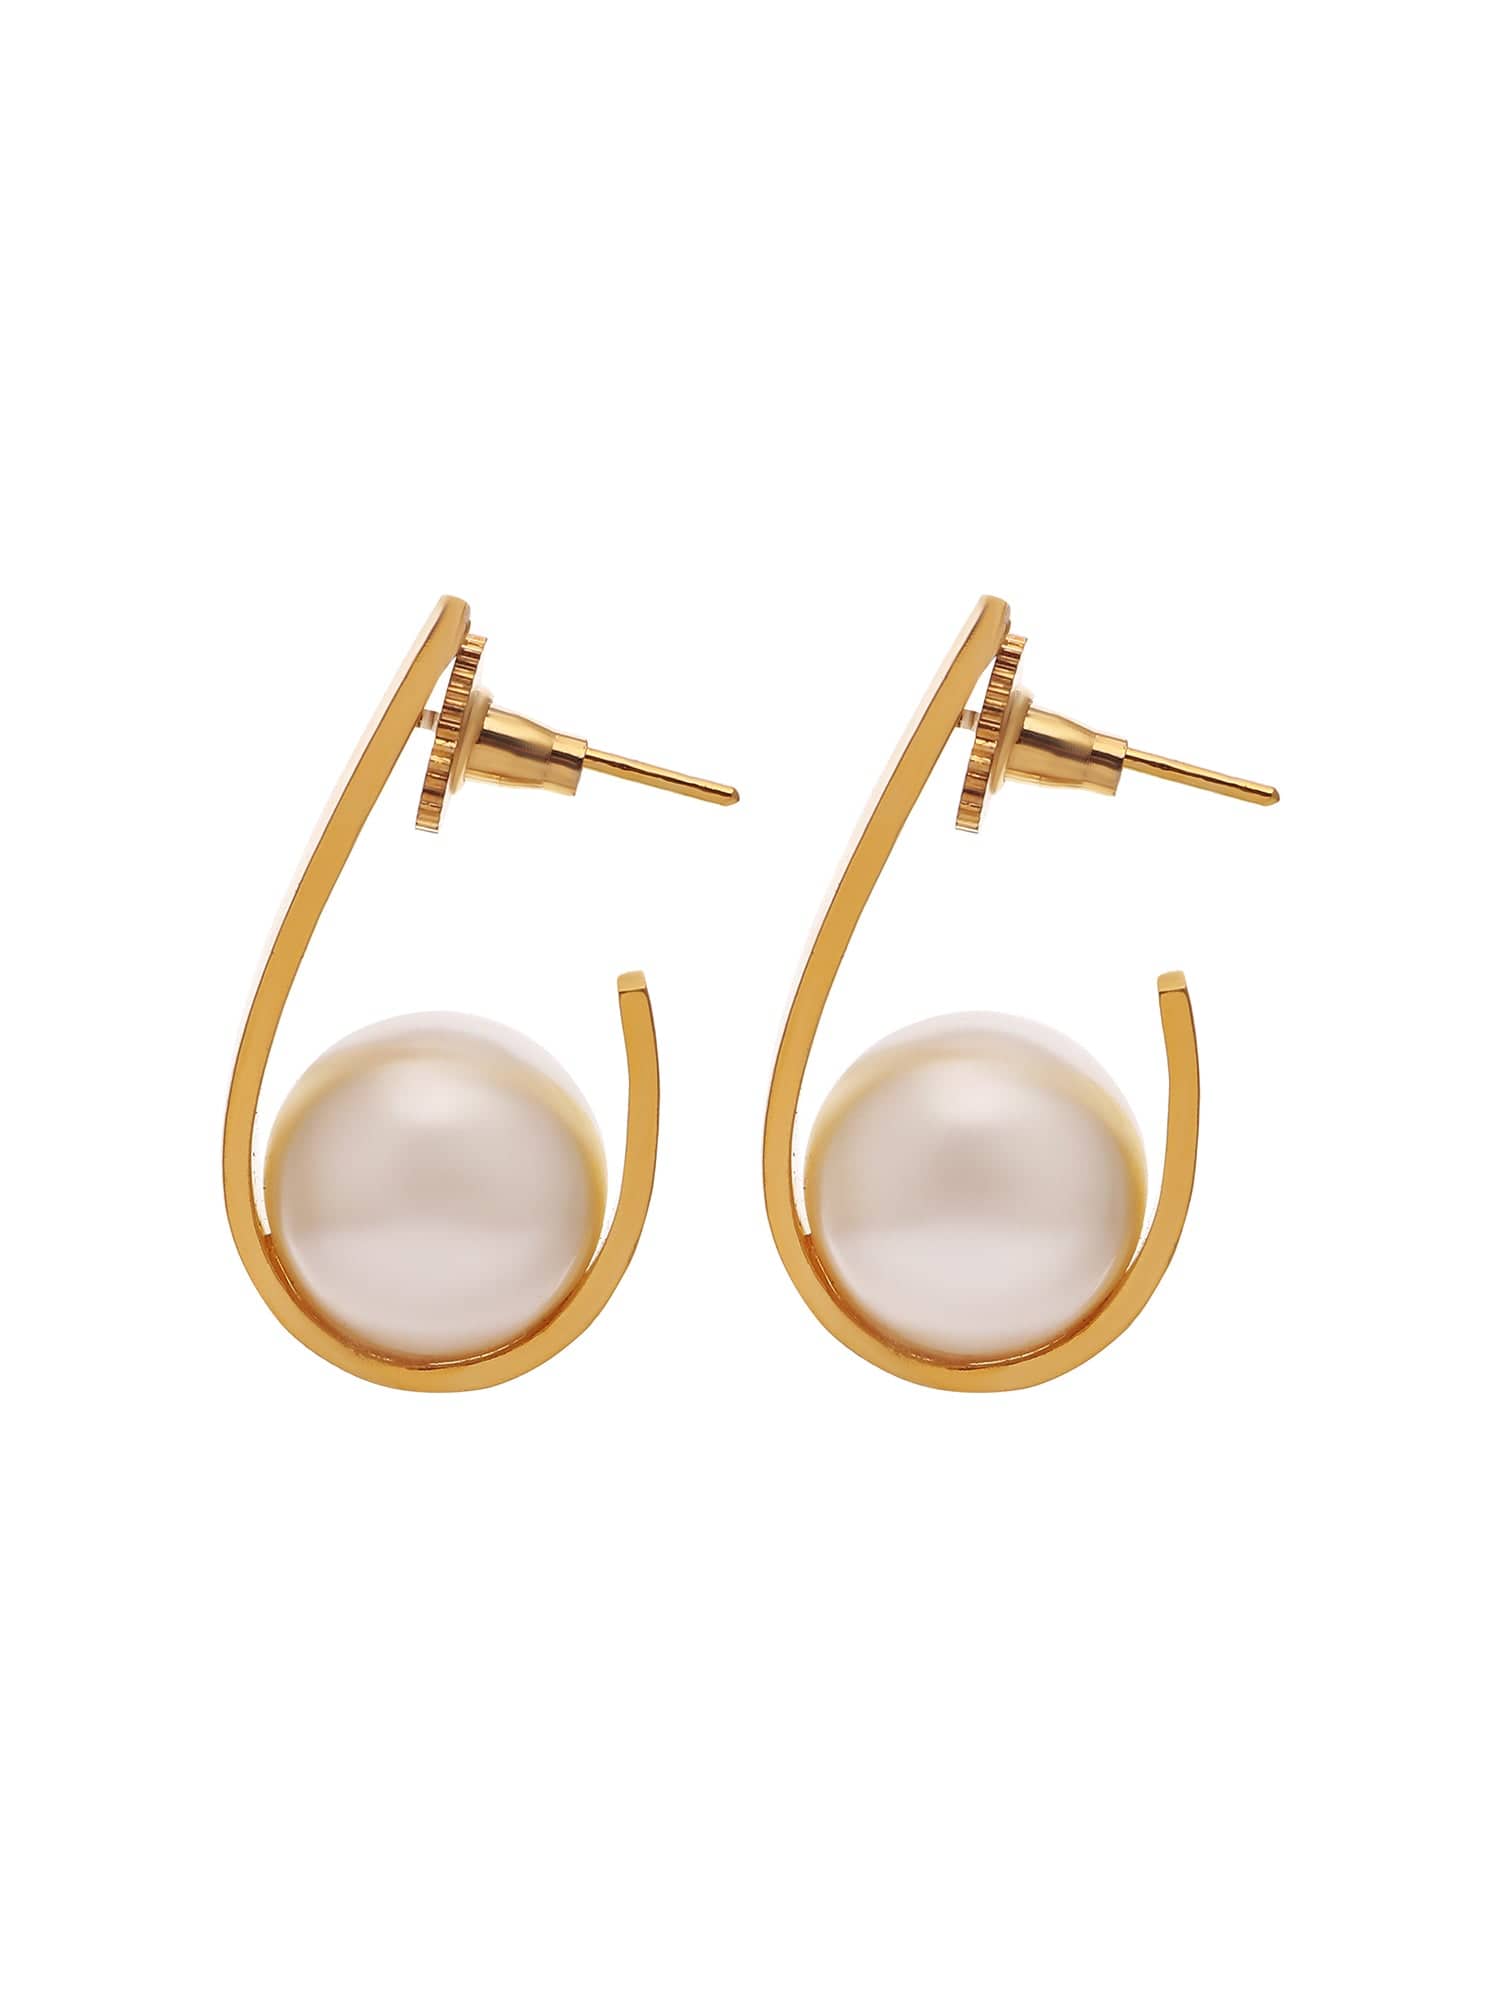 Stella pearl earrings